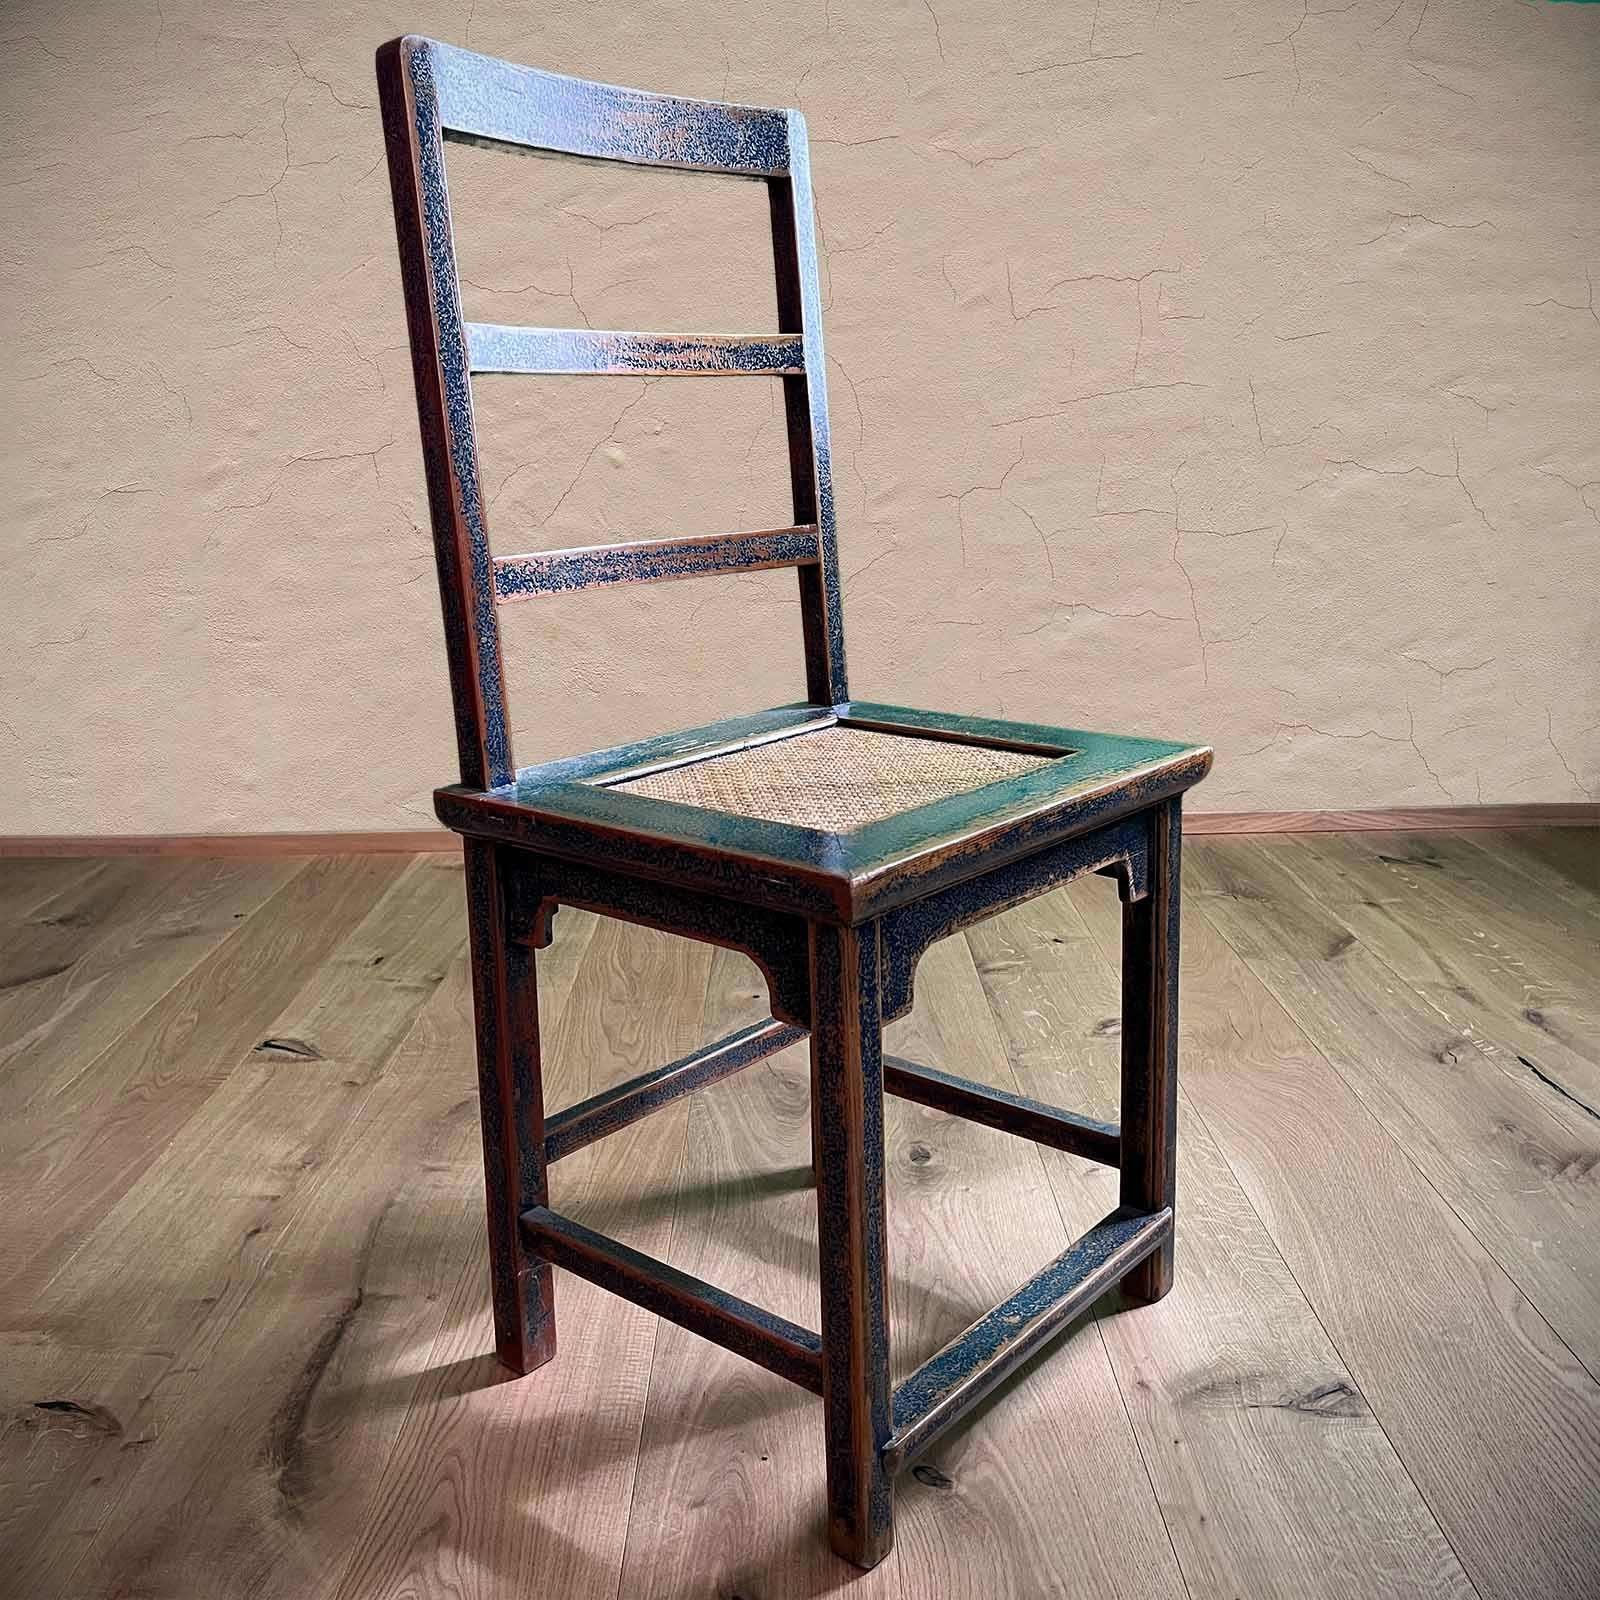 Asien LifeStyle 4-Fußstuhl China Sitzfläche mit Holz Stuhl Rattan Vintage